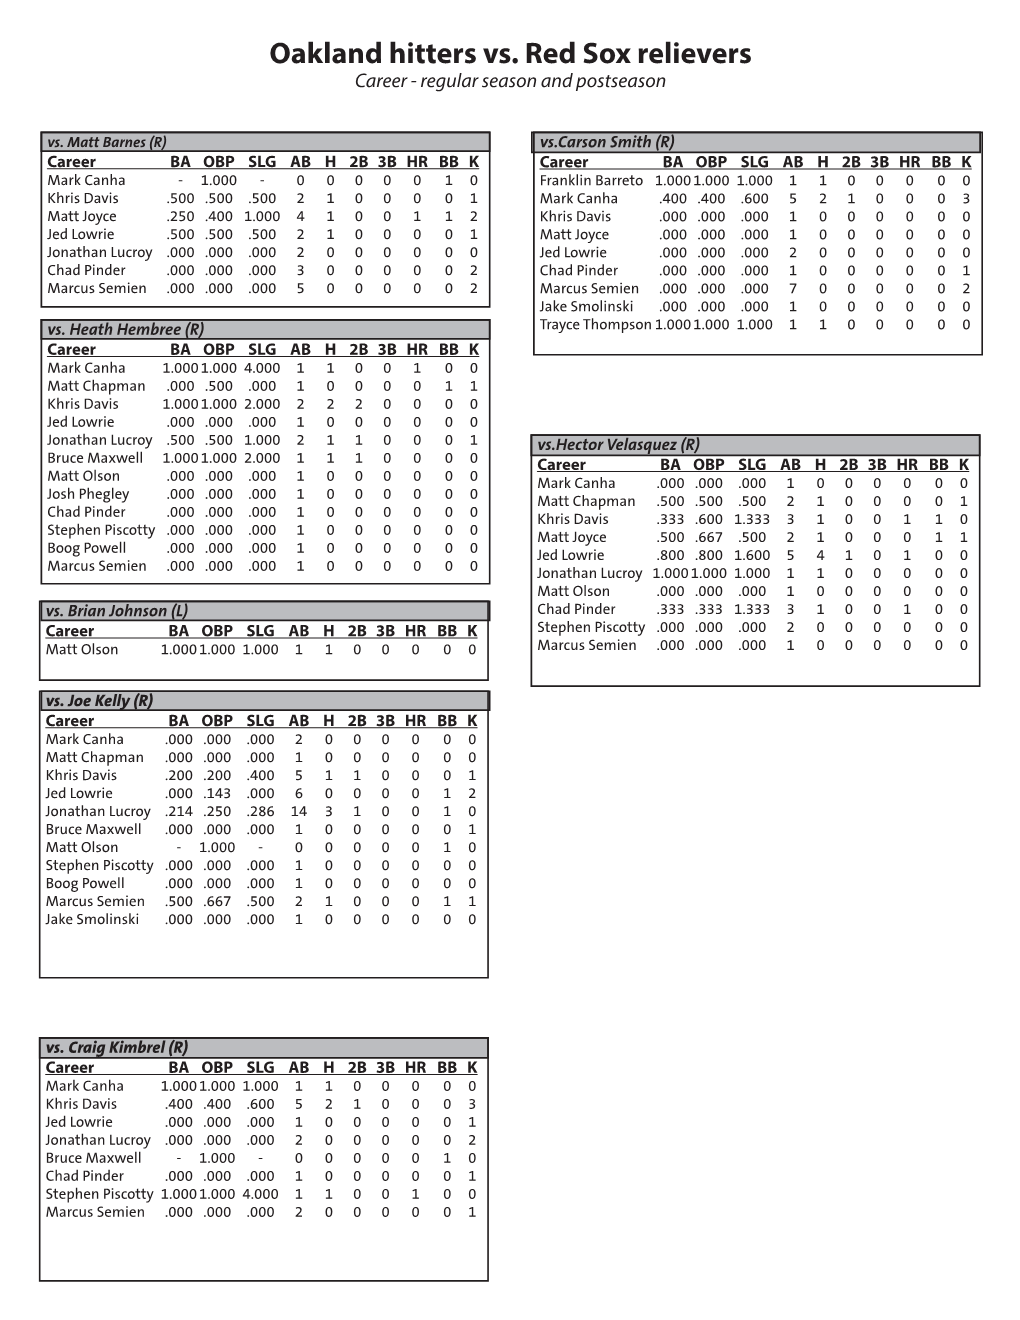 Oakland Hitters Vs. Red Sox Relievers Career - Regular Season and Postseason Vs